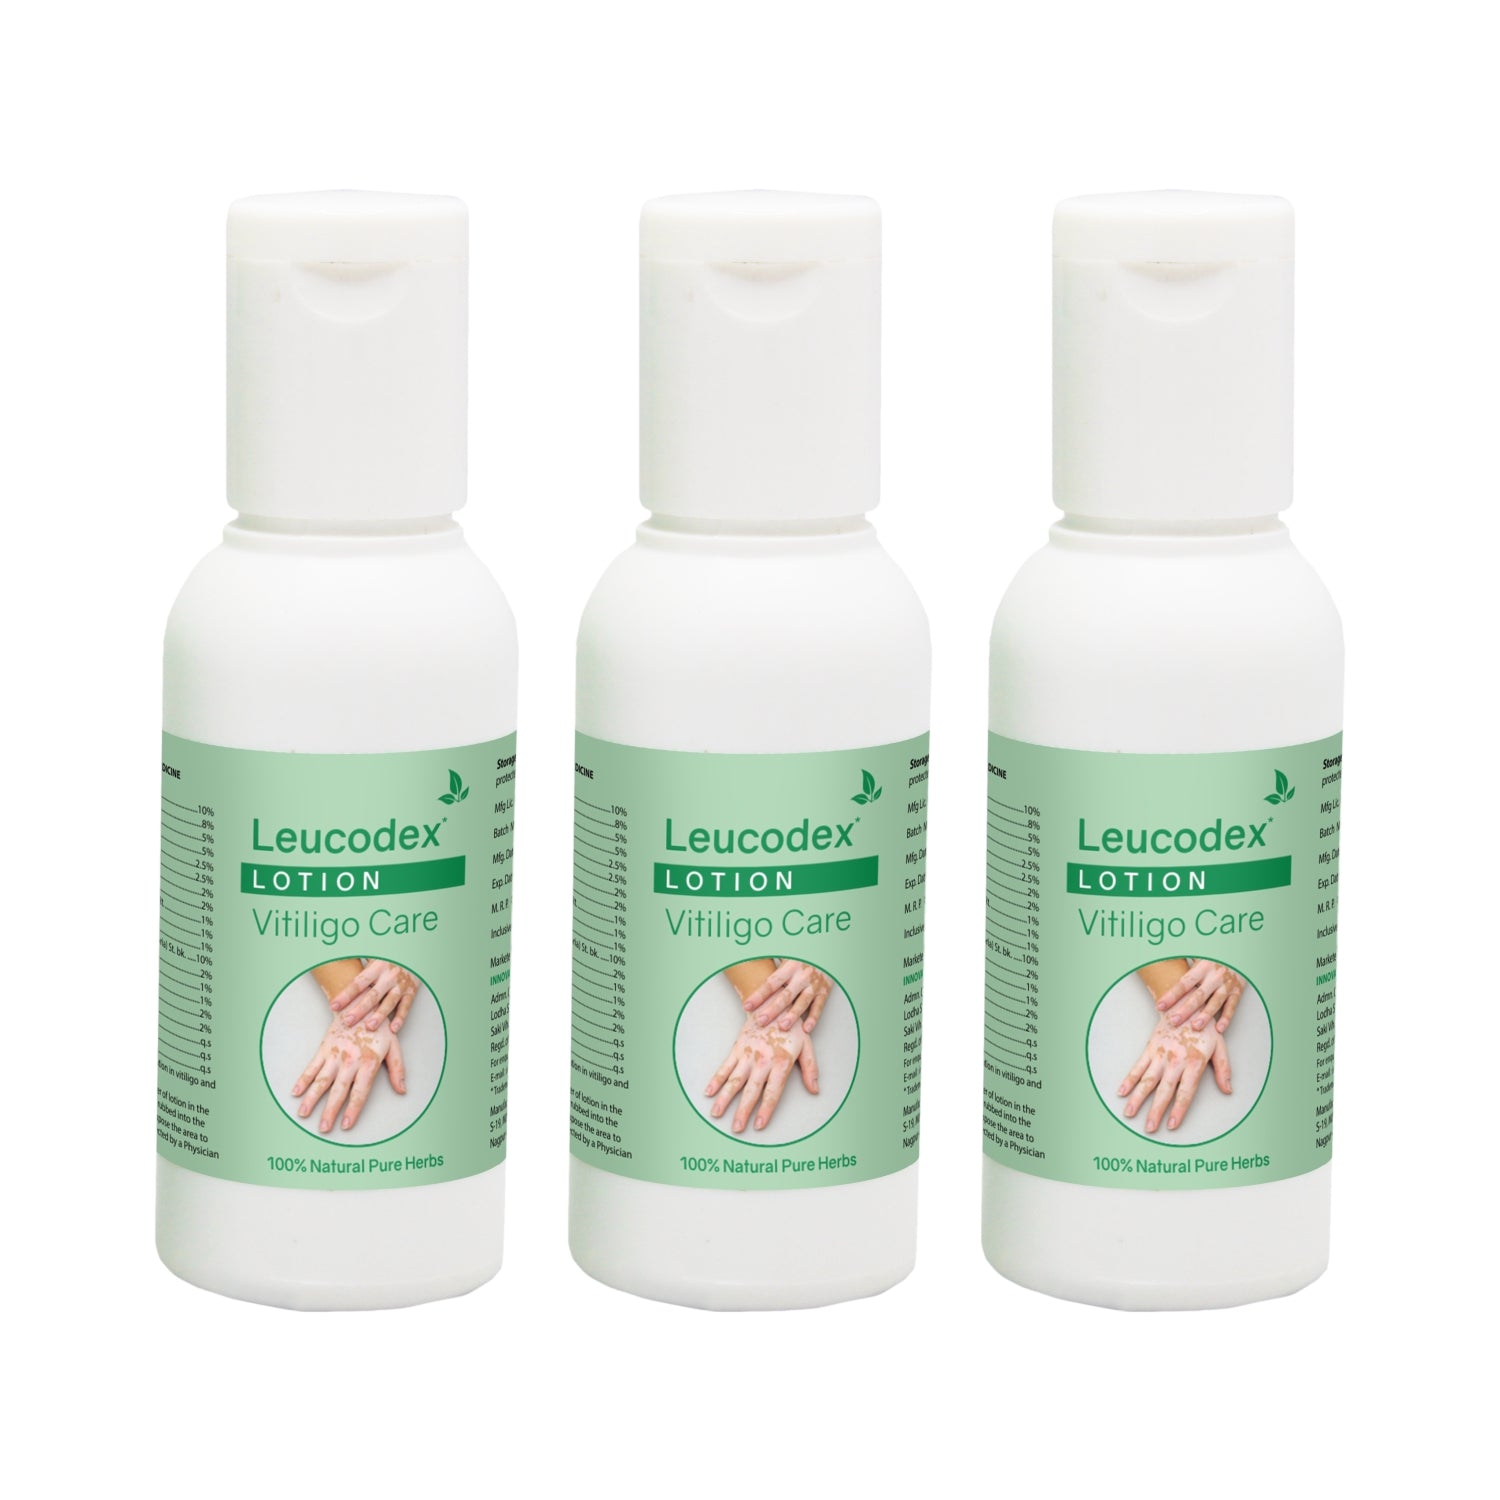 Leucodex Lotion (50 ml)